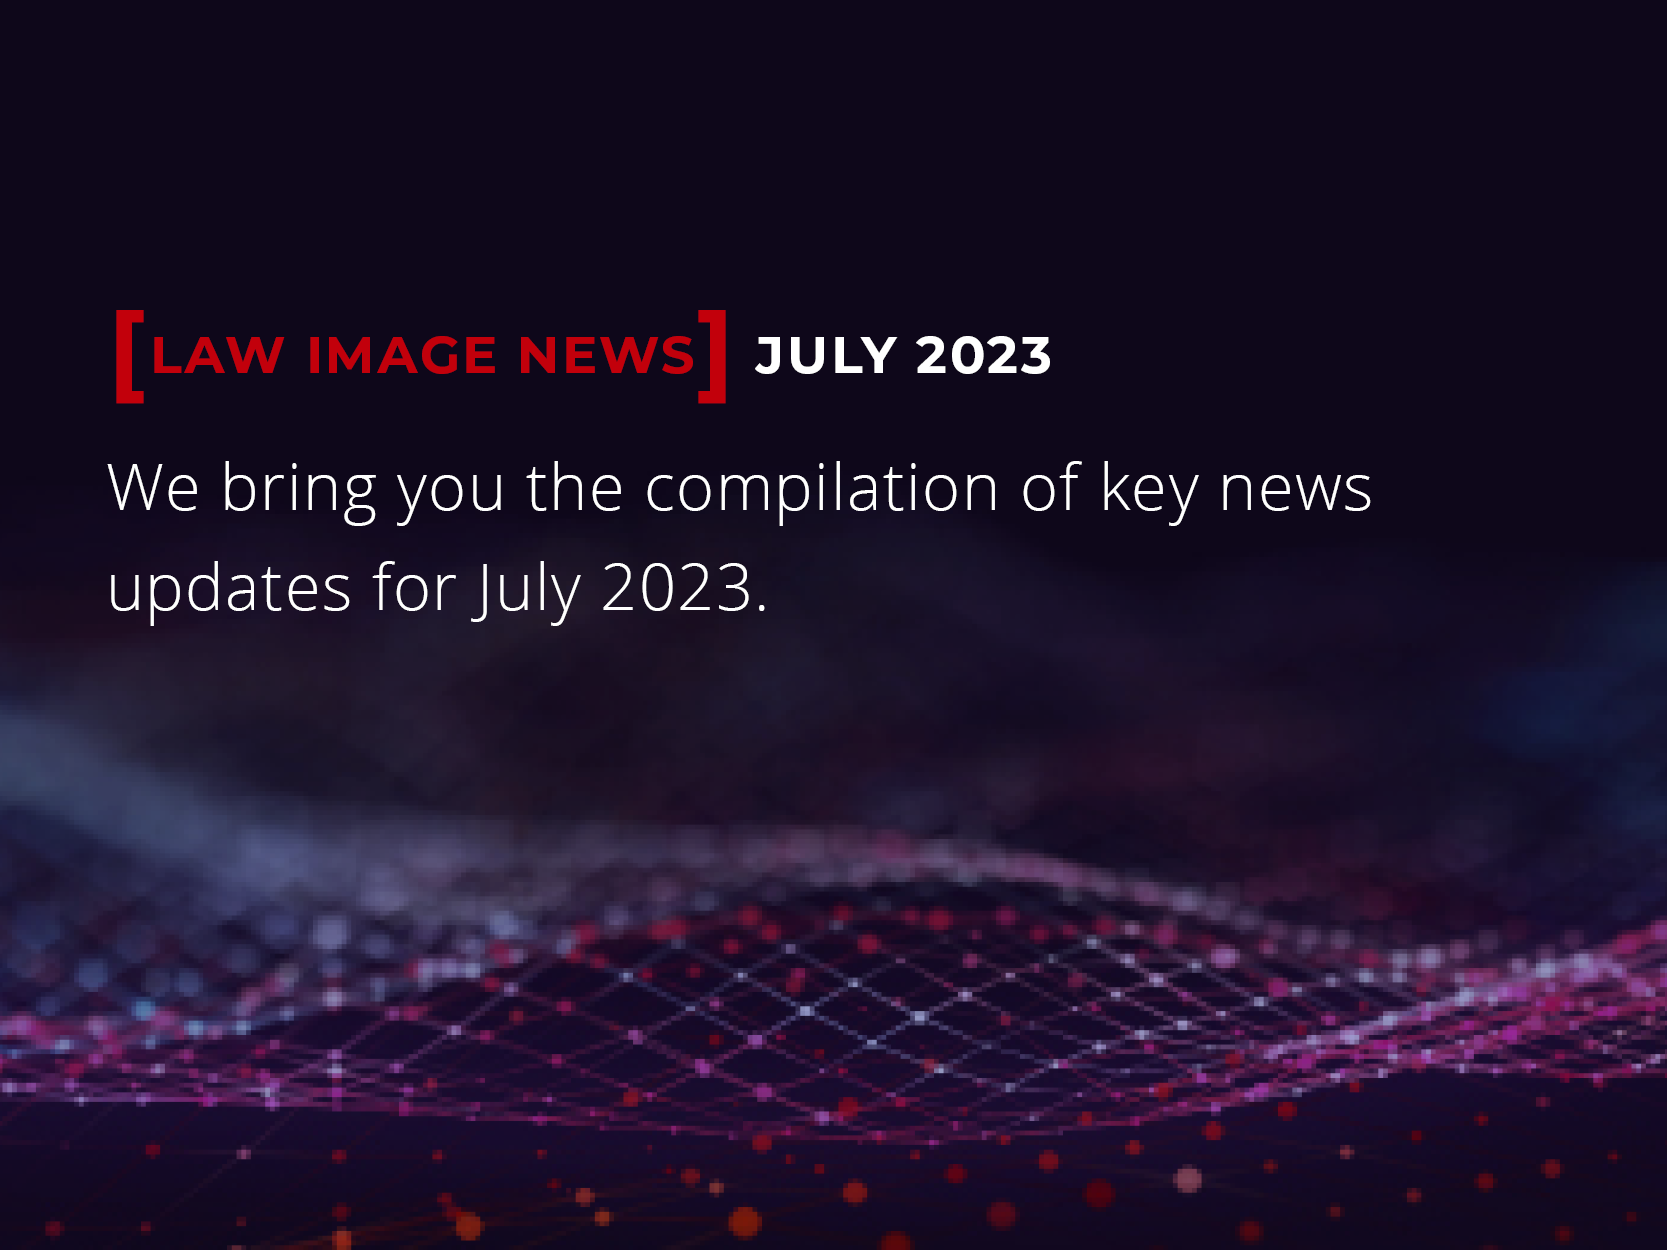 July 2023 Key legal news compilation Australia